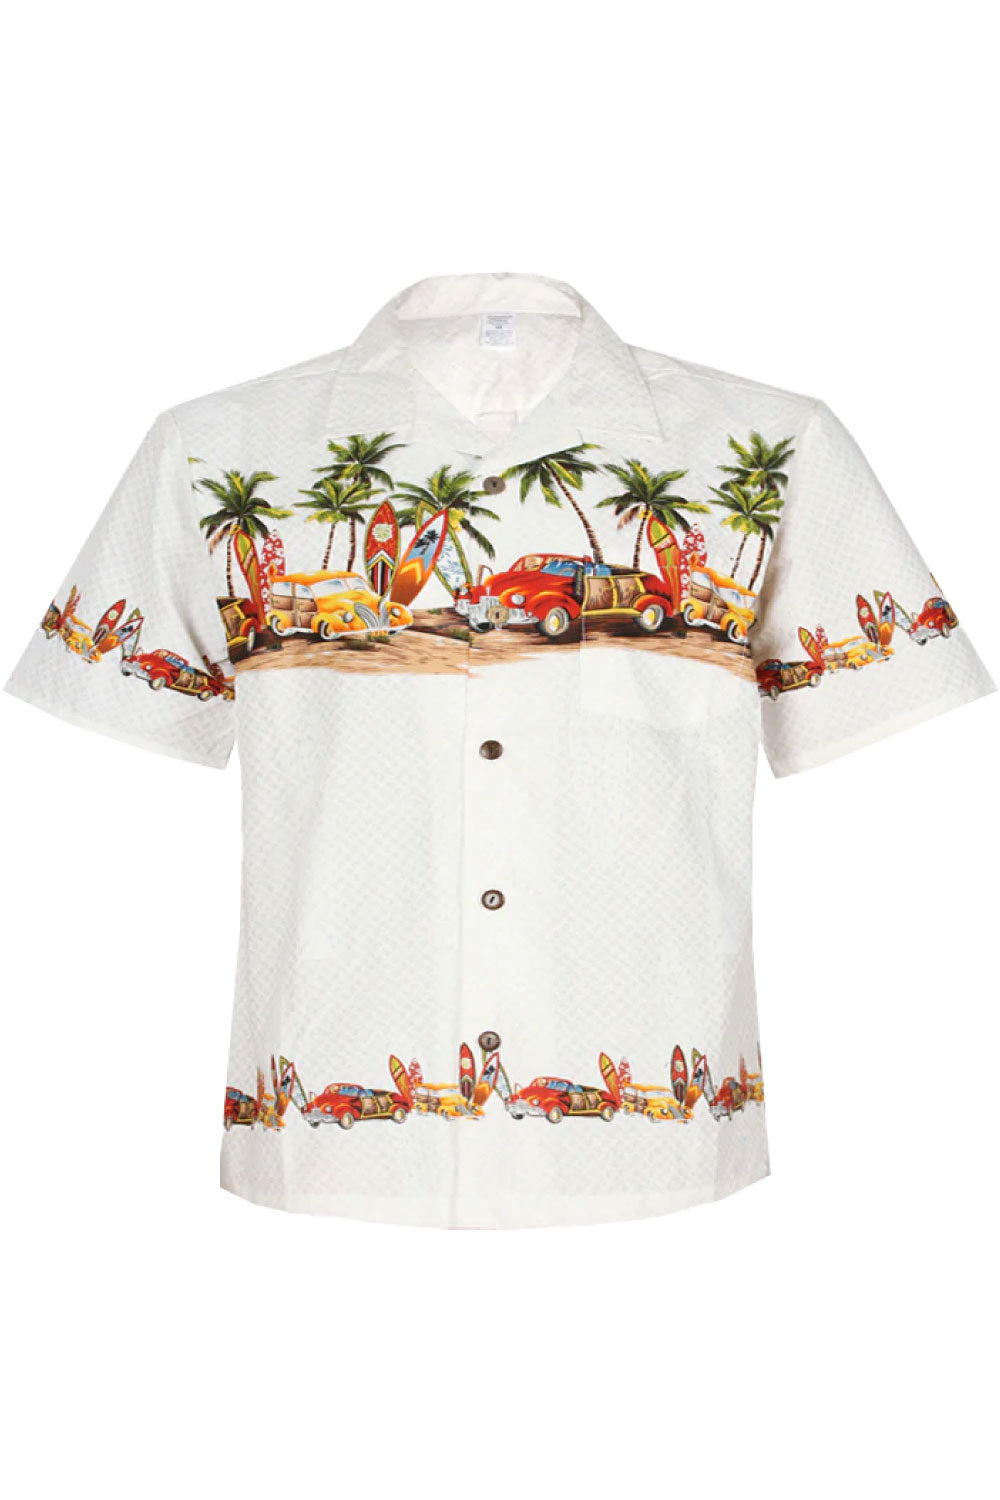 Image of the front of Palmwave's Off White Vintage Car Aloha Men's Shirt.